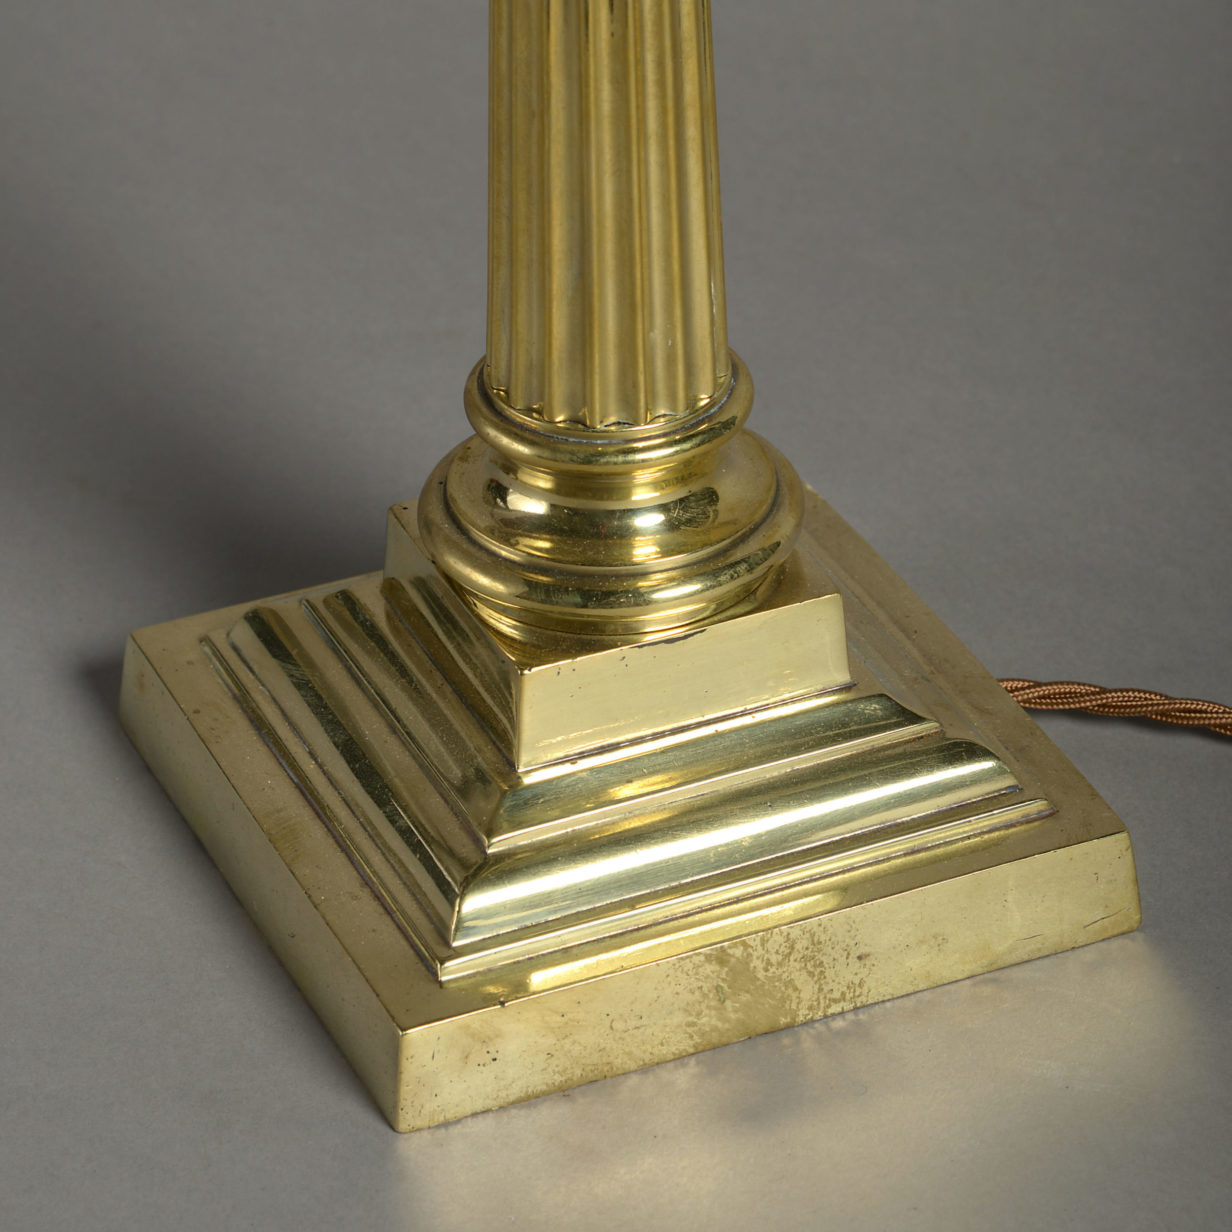 A late 19th century brass column lamp base